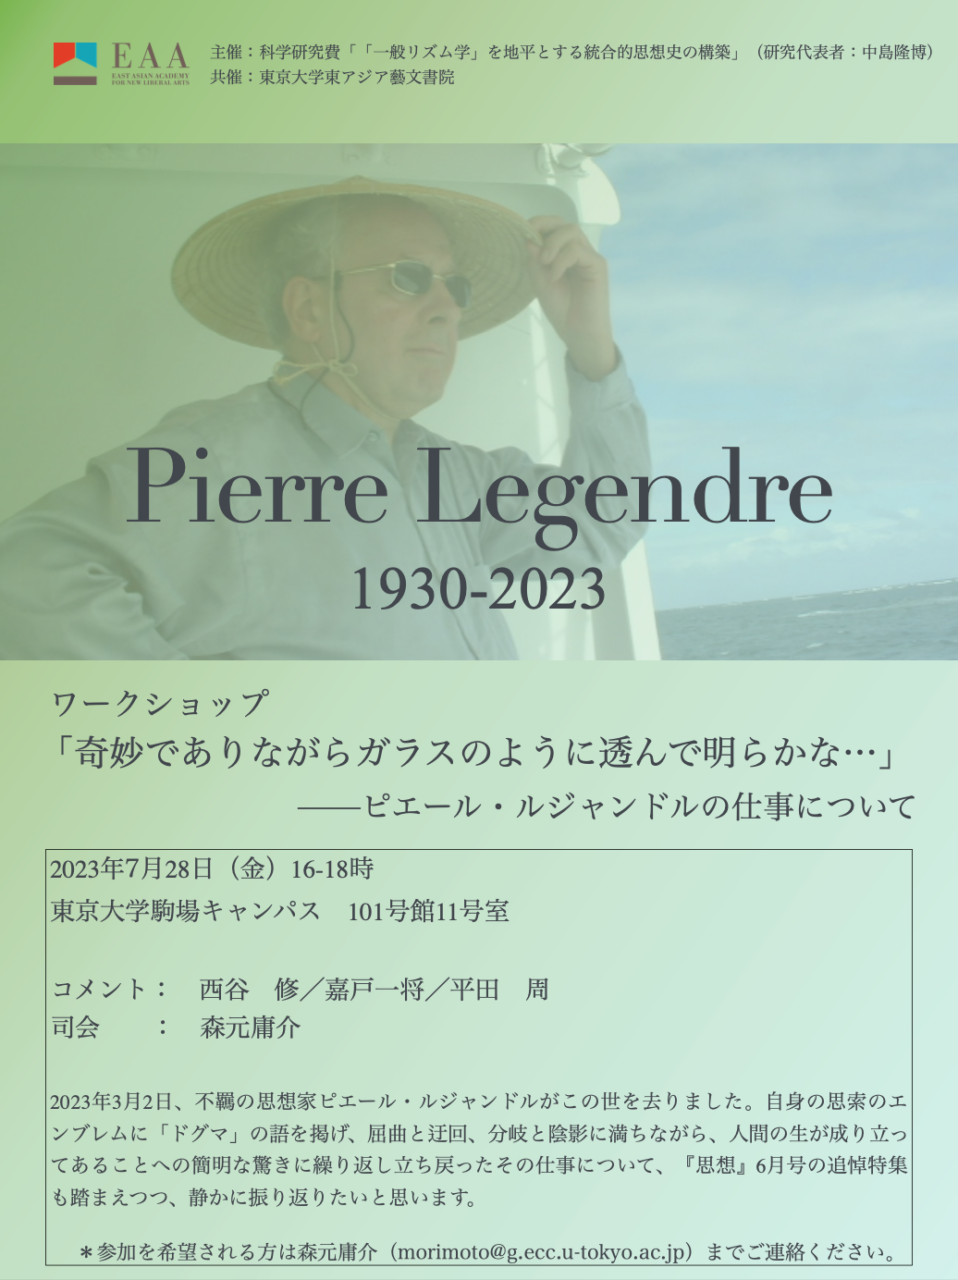 Pierre Legendre 1930-2023